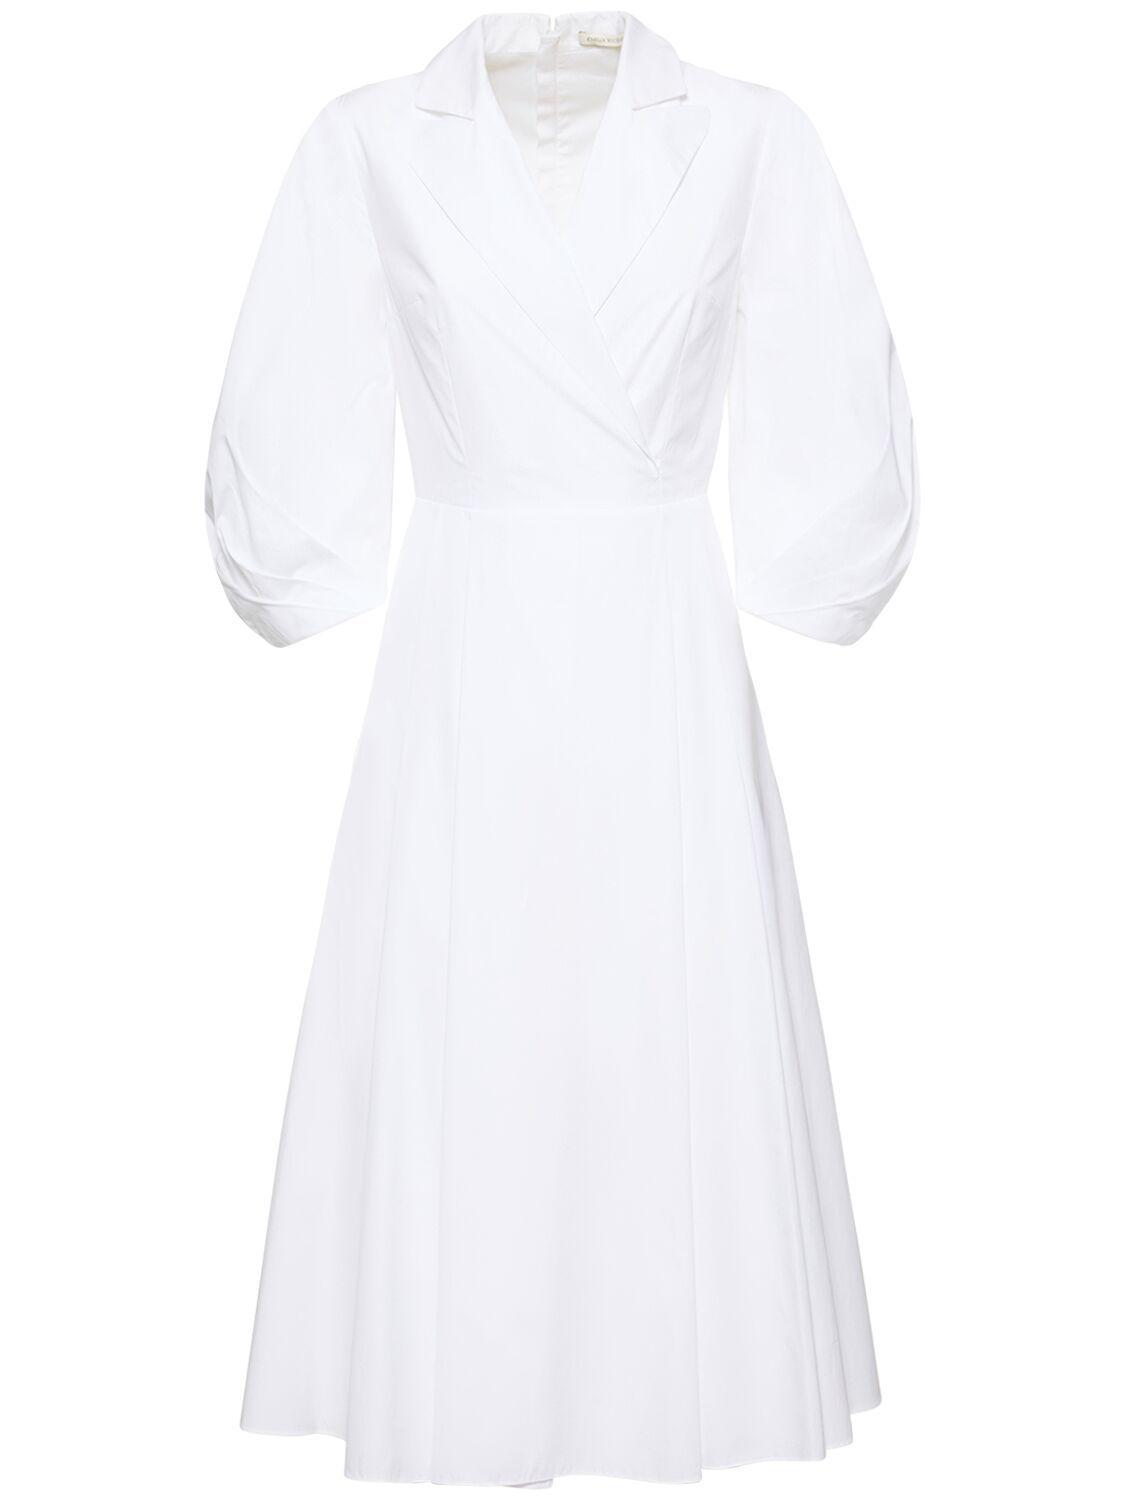 Emilia Wickstead Brittany Cotton Poplin Dress in White | Lyst